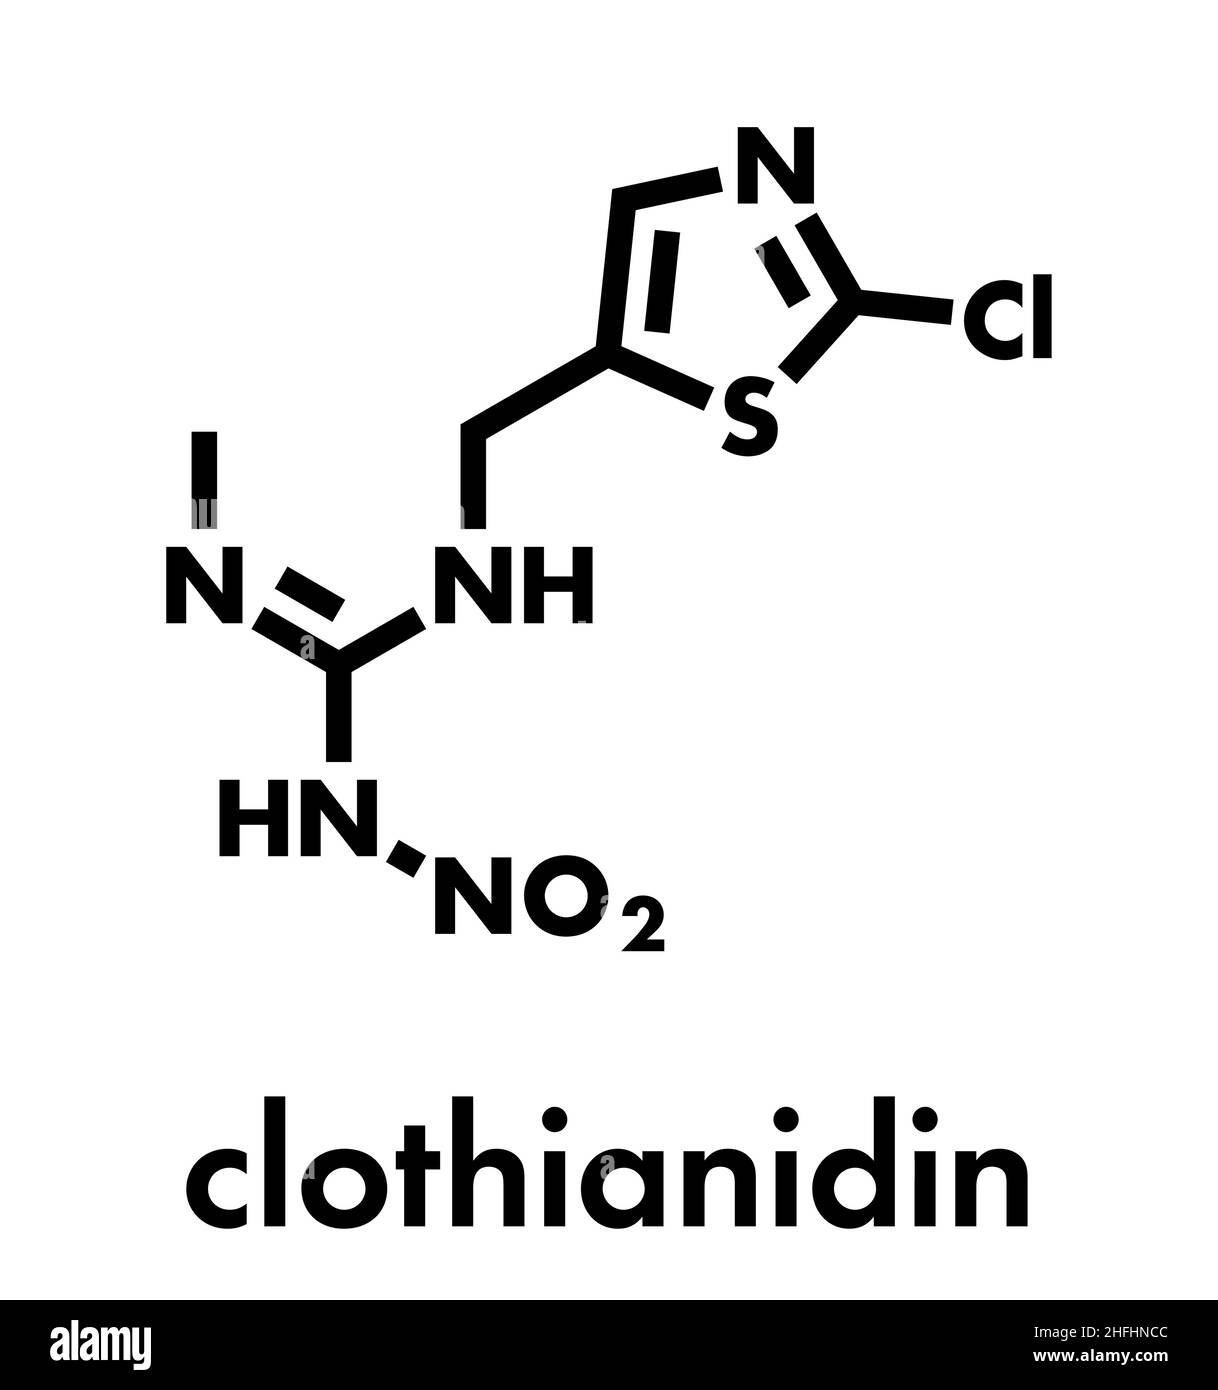 Clothianidin Imágenes recortadas de stock - Alamy